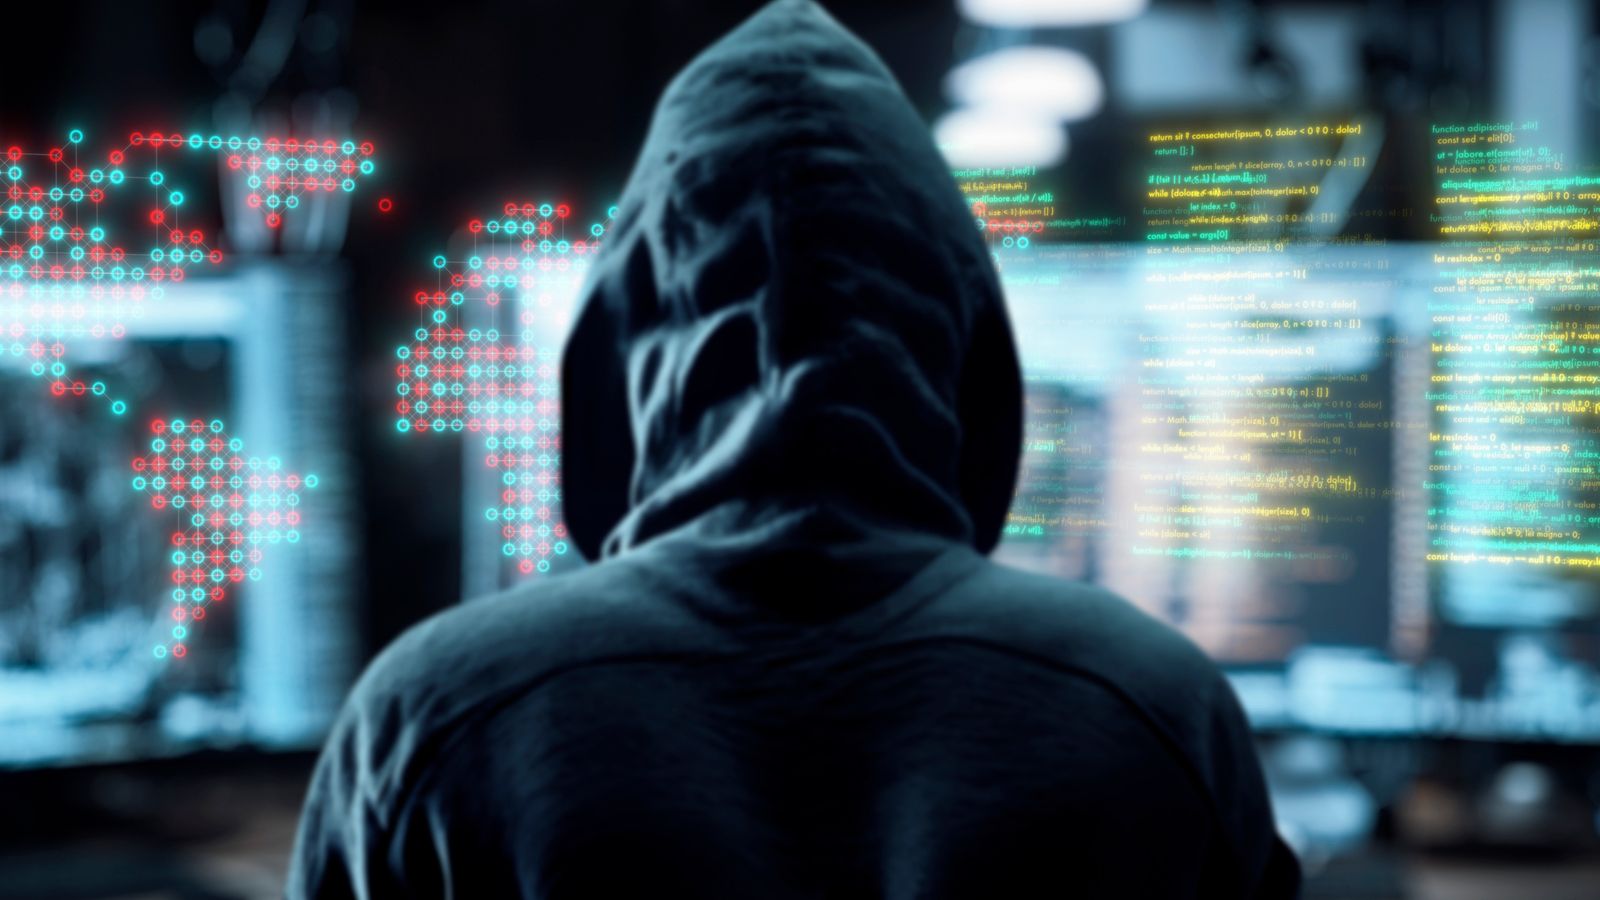 Notorious cybercrime gang Lockbit disrupted by NCA, FBI and international coalition | UK News